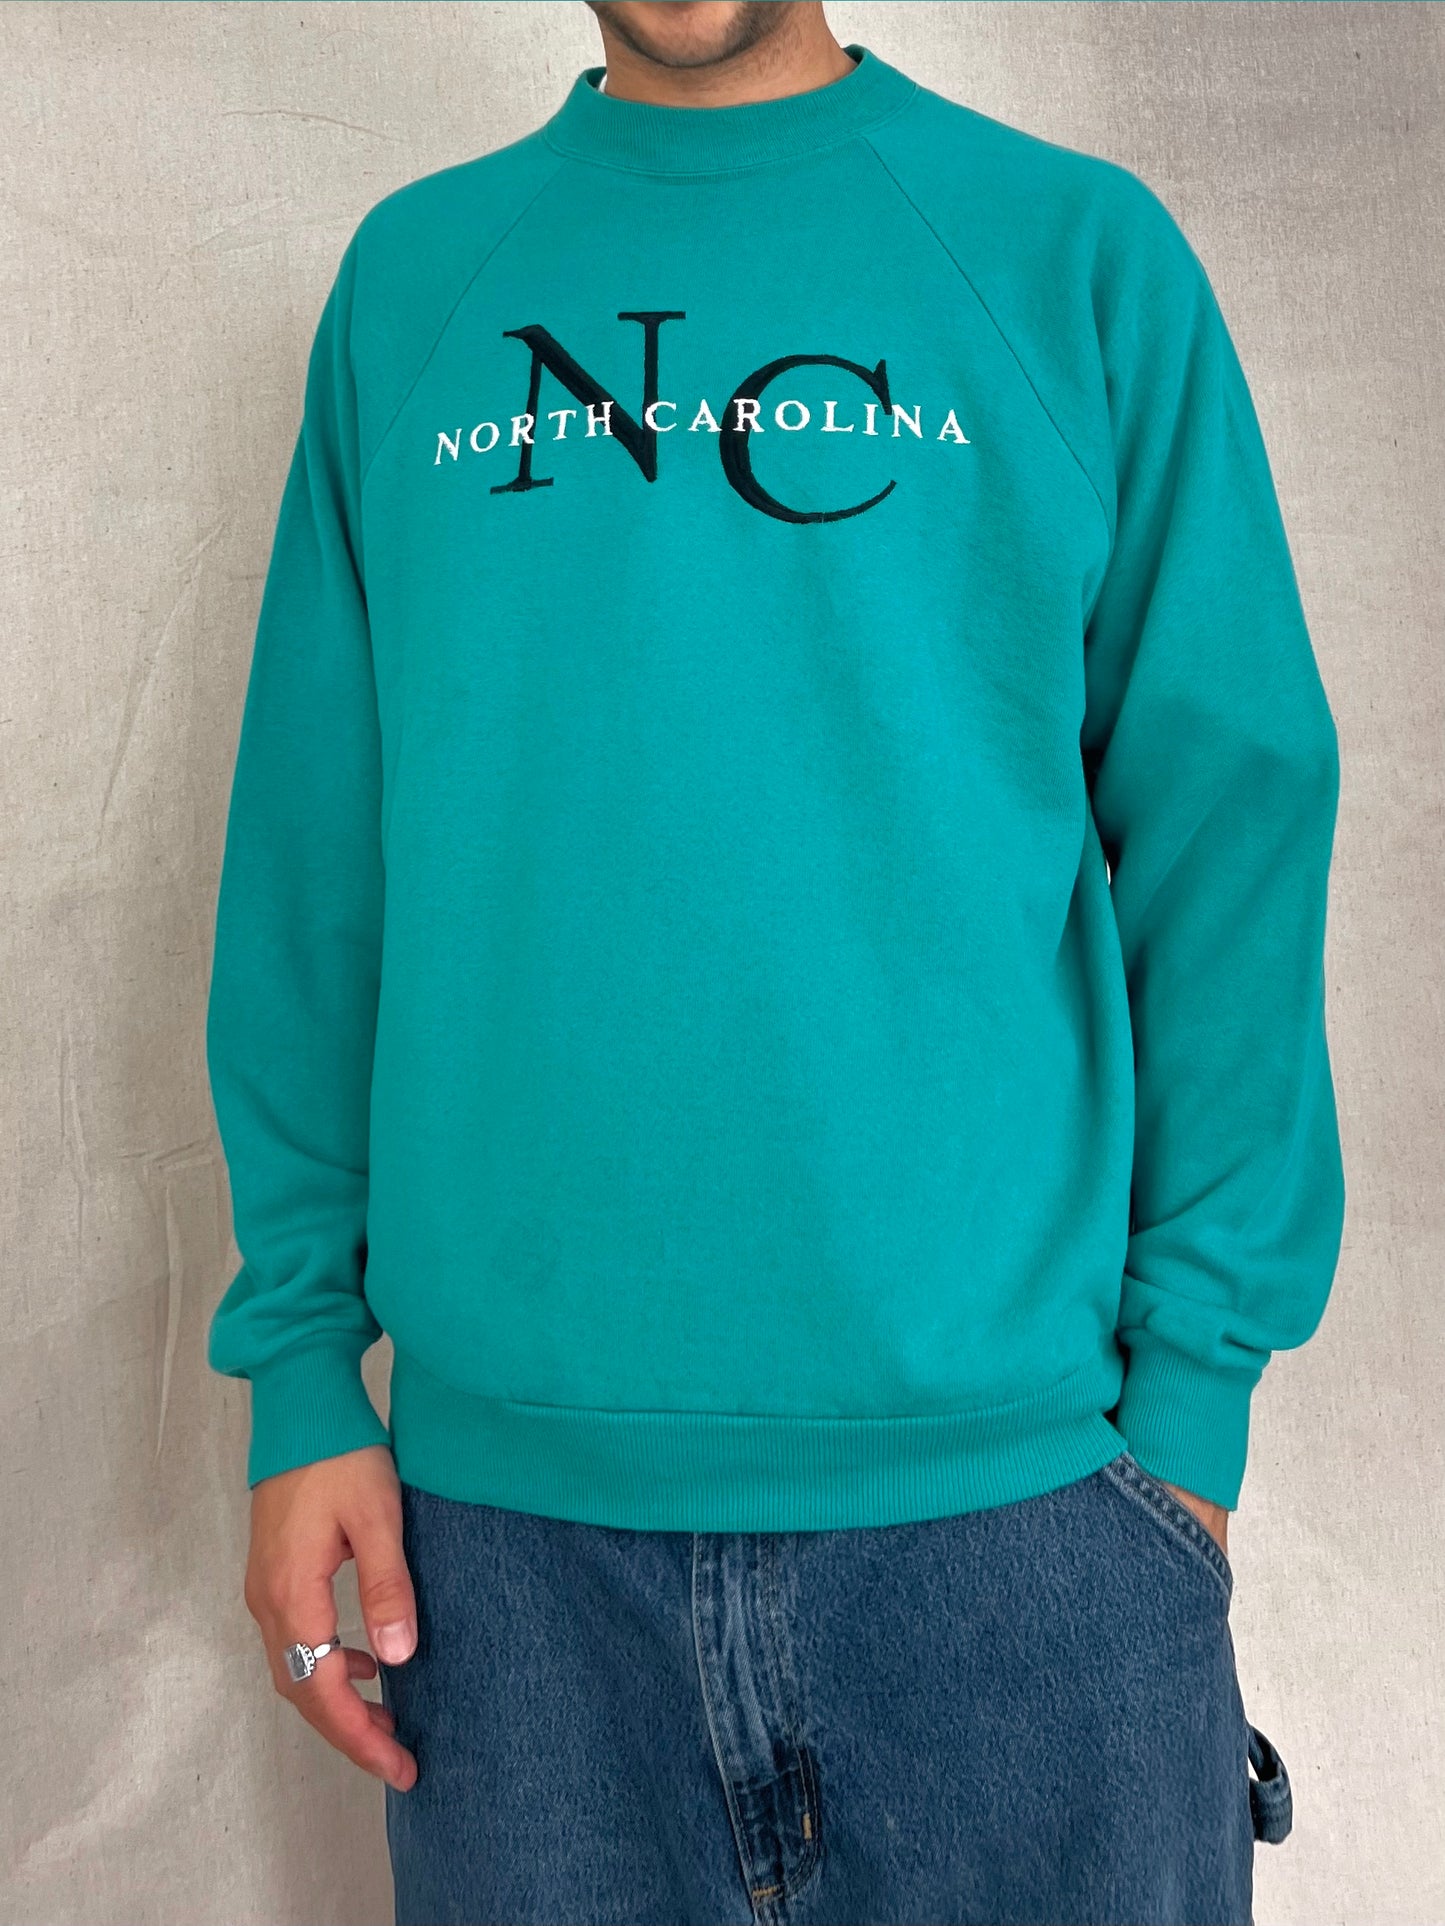 90's North Carolina Embroidered Vintage Sweatshirt Size M